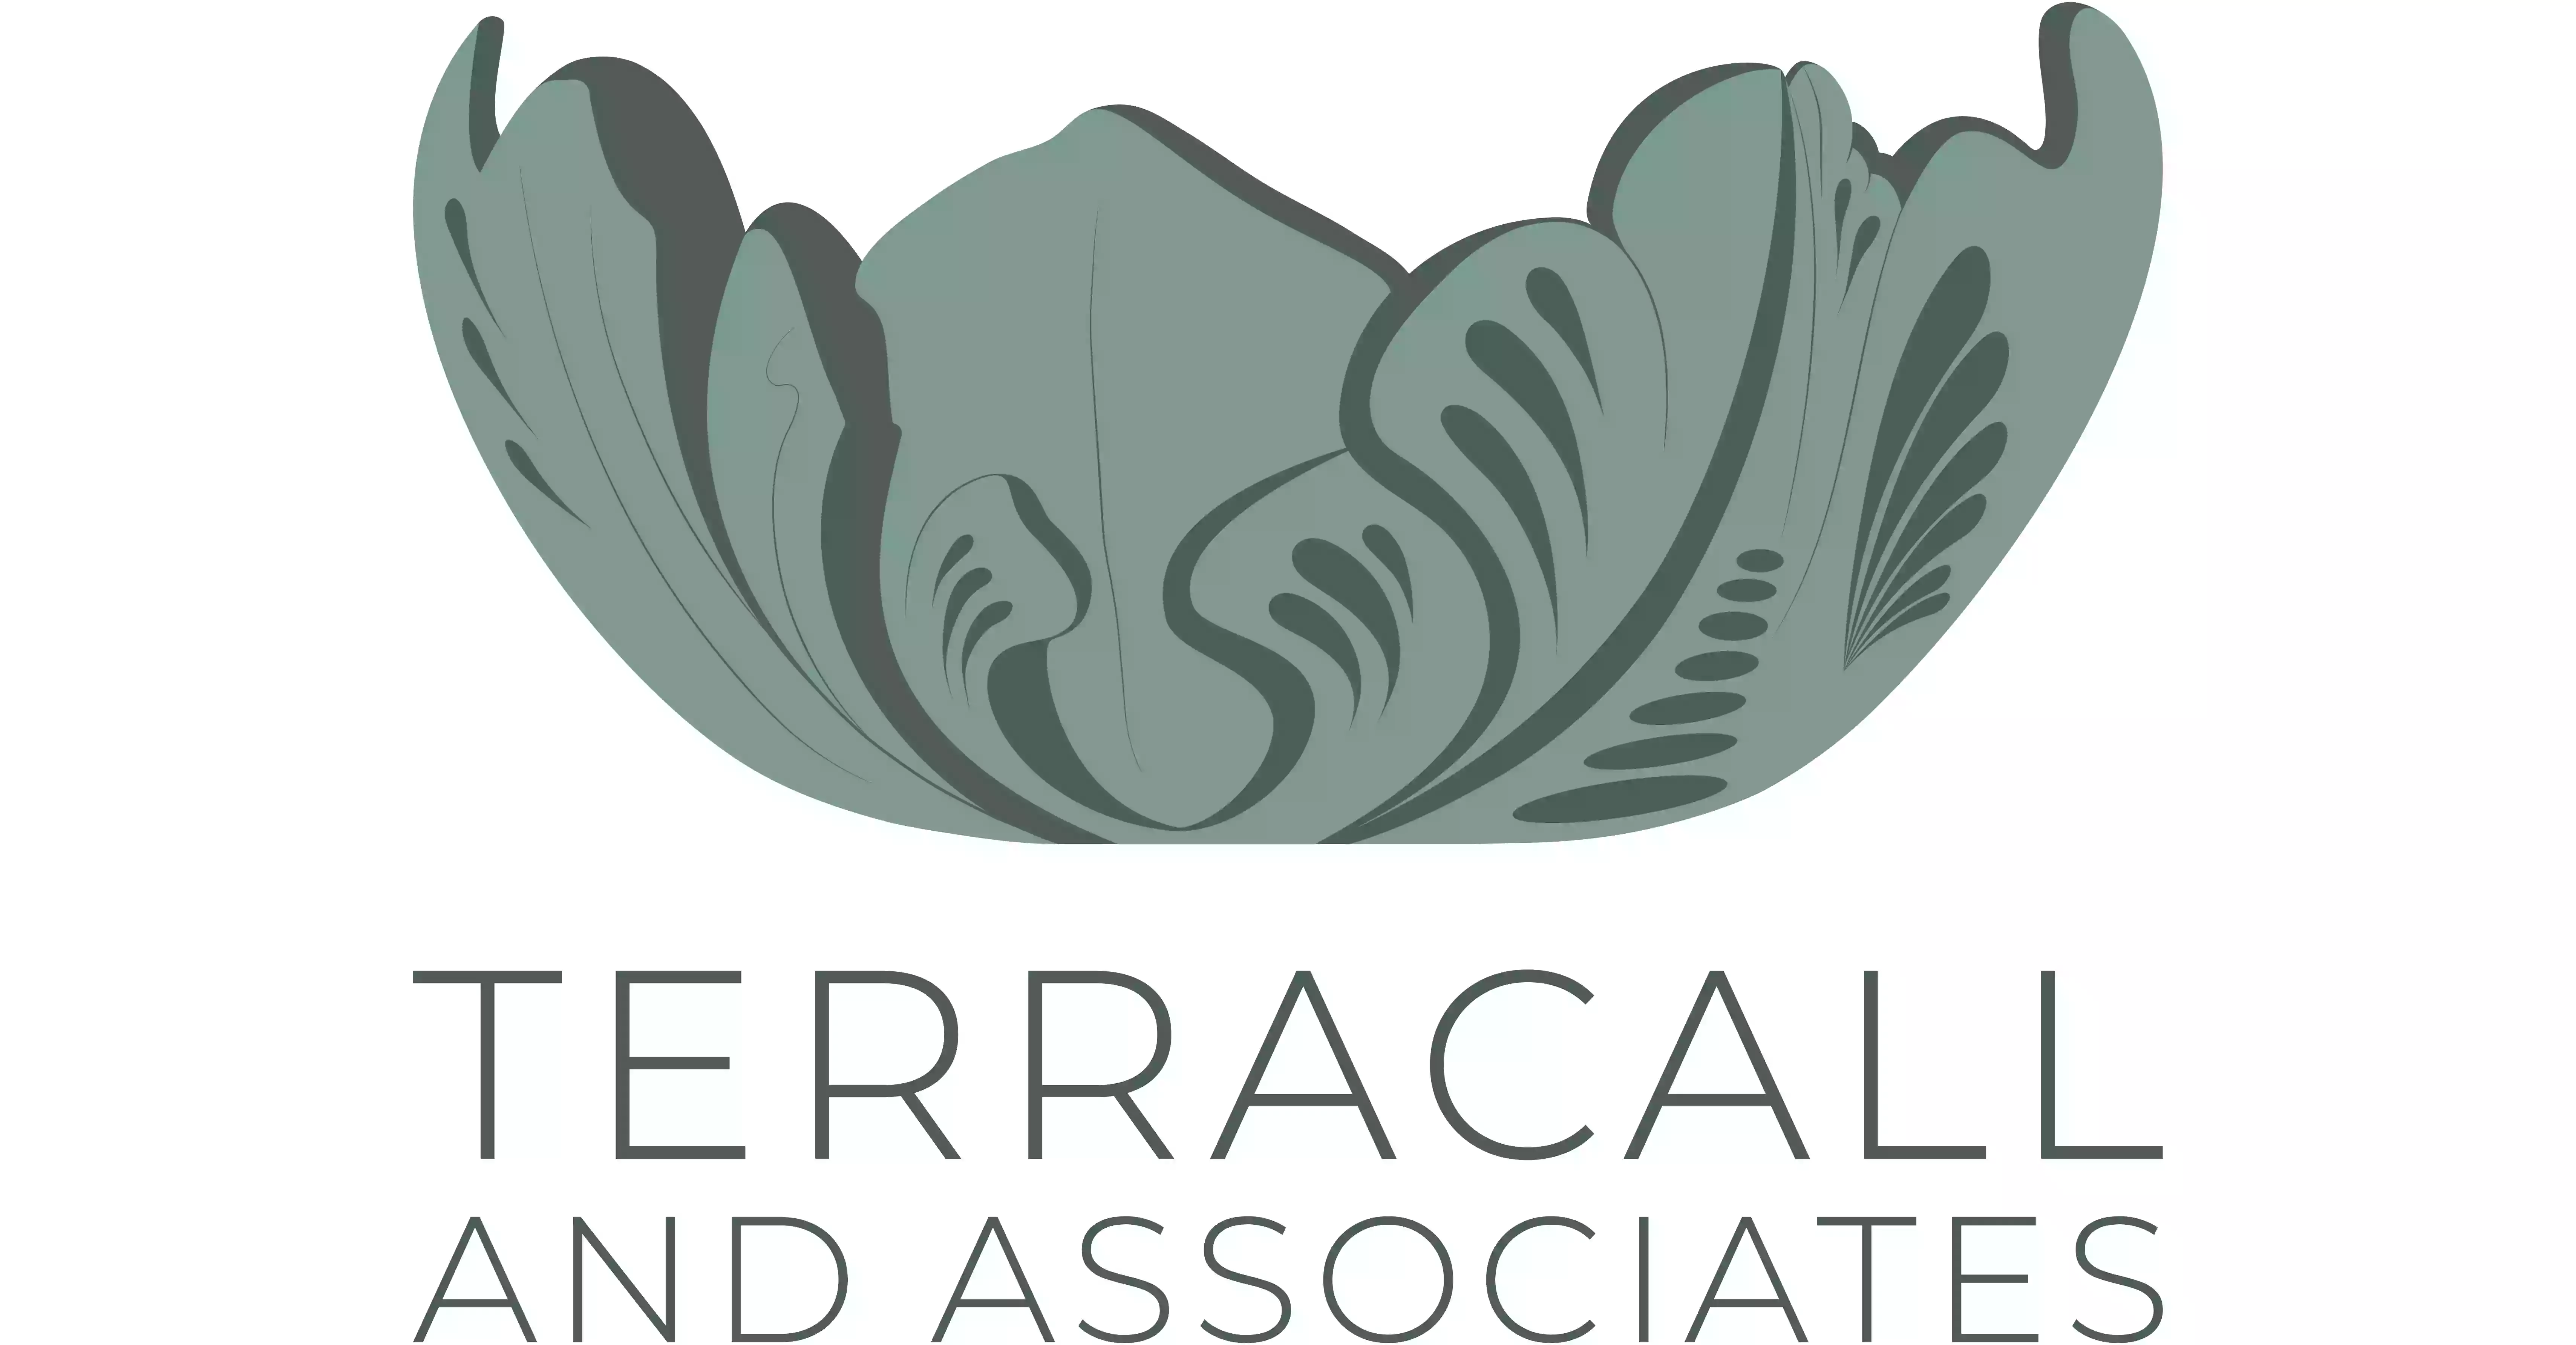 Terracall and Associates